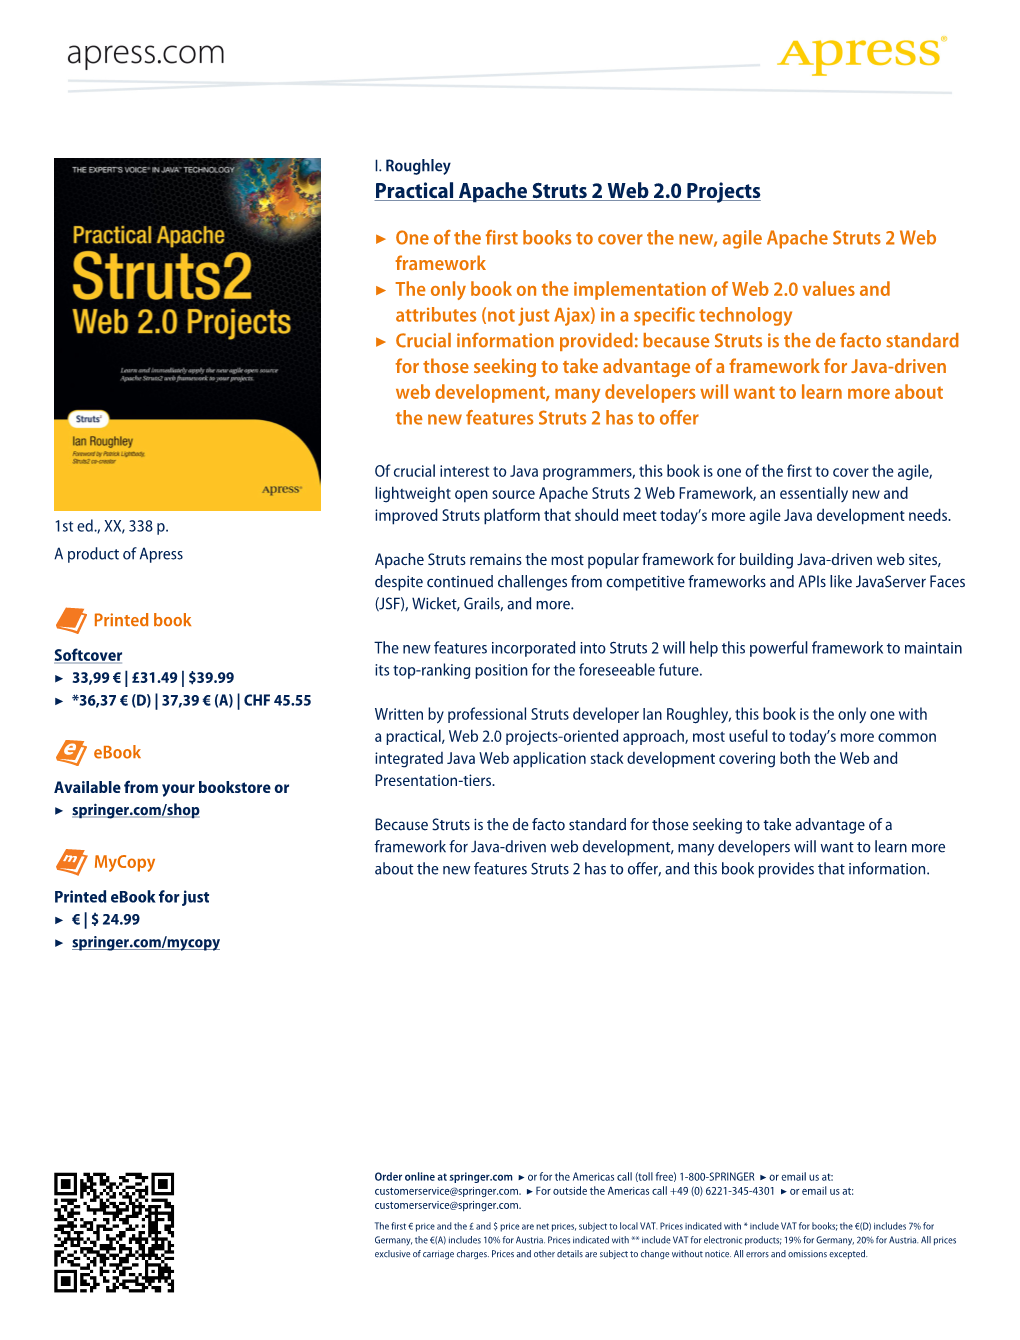 Practical Apache Struts 2 Web 2.0 Projects